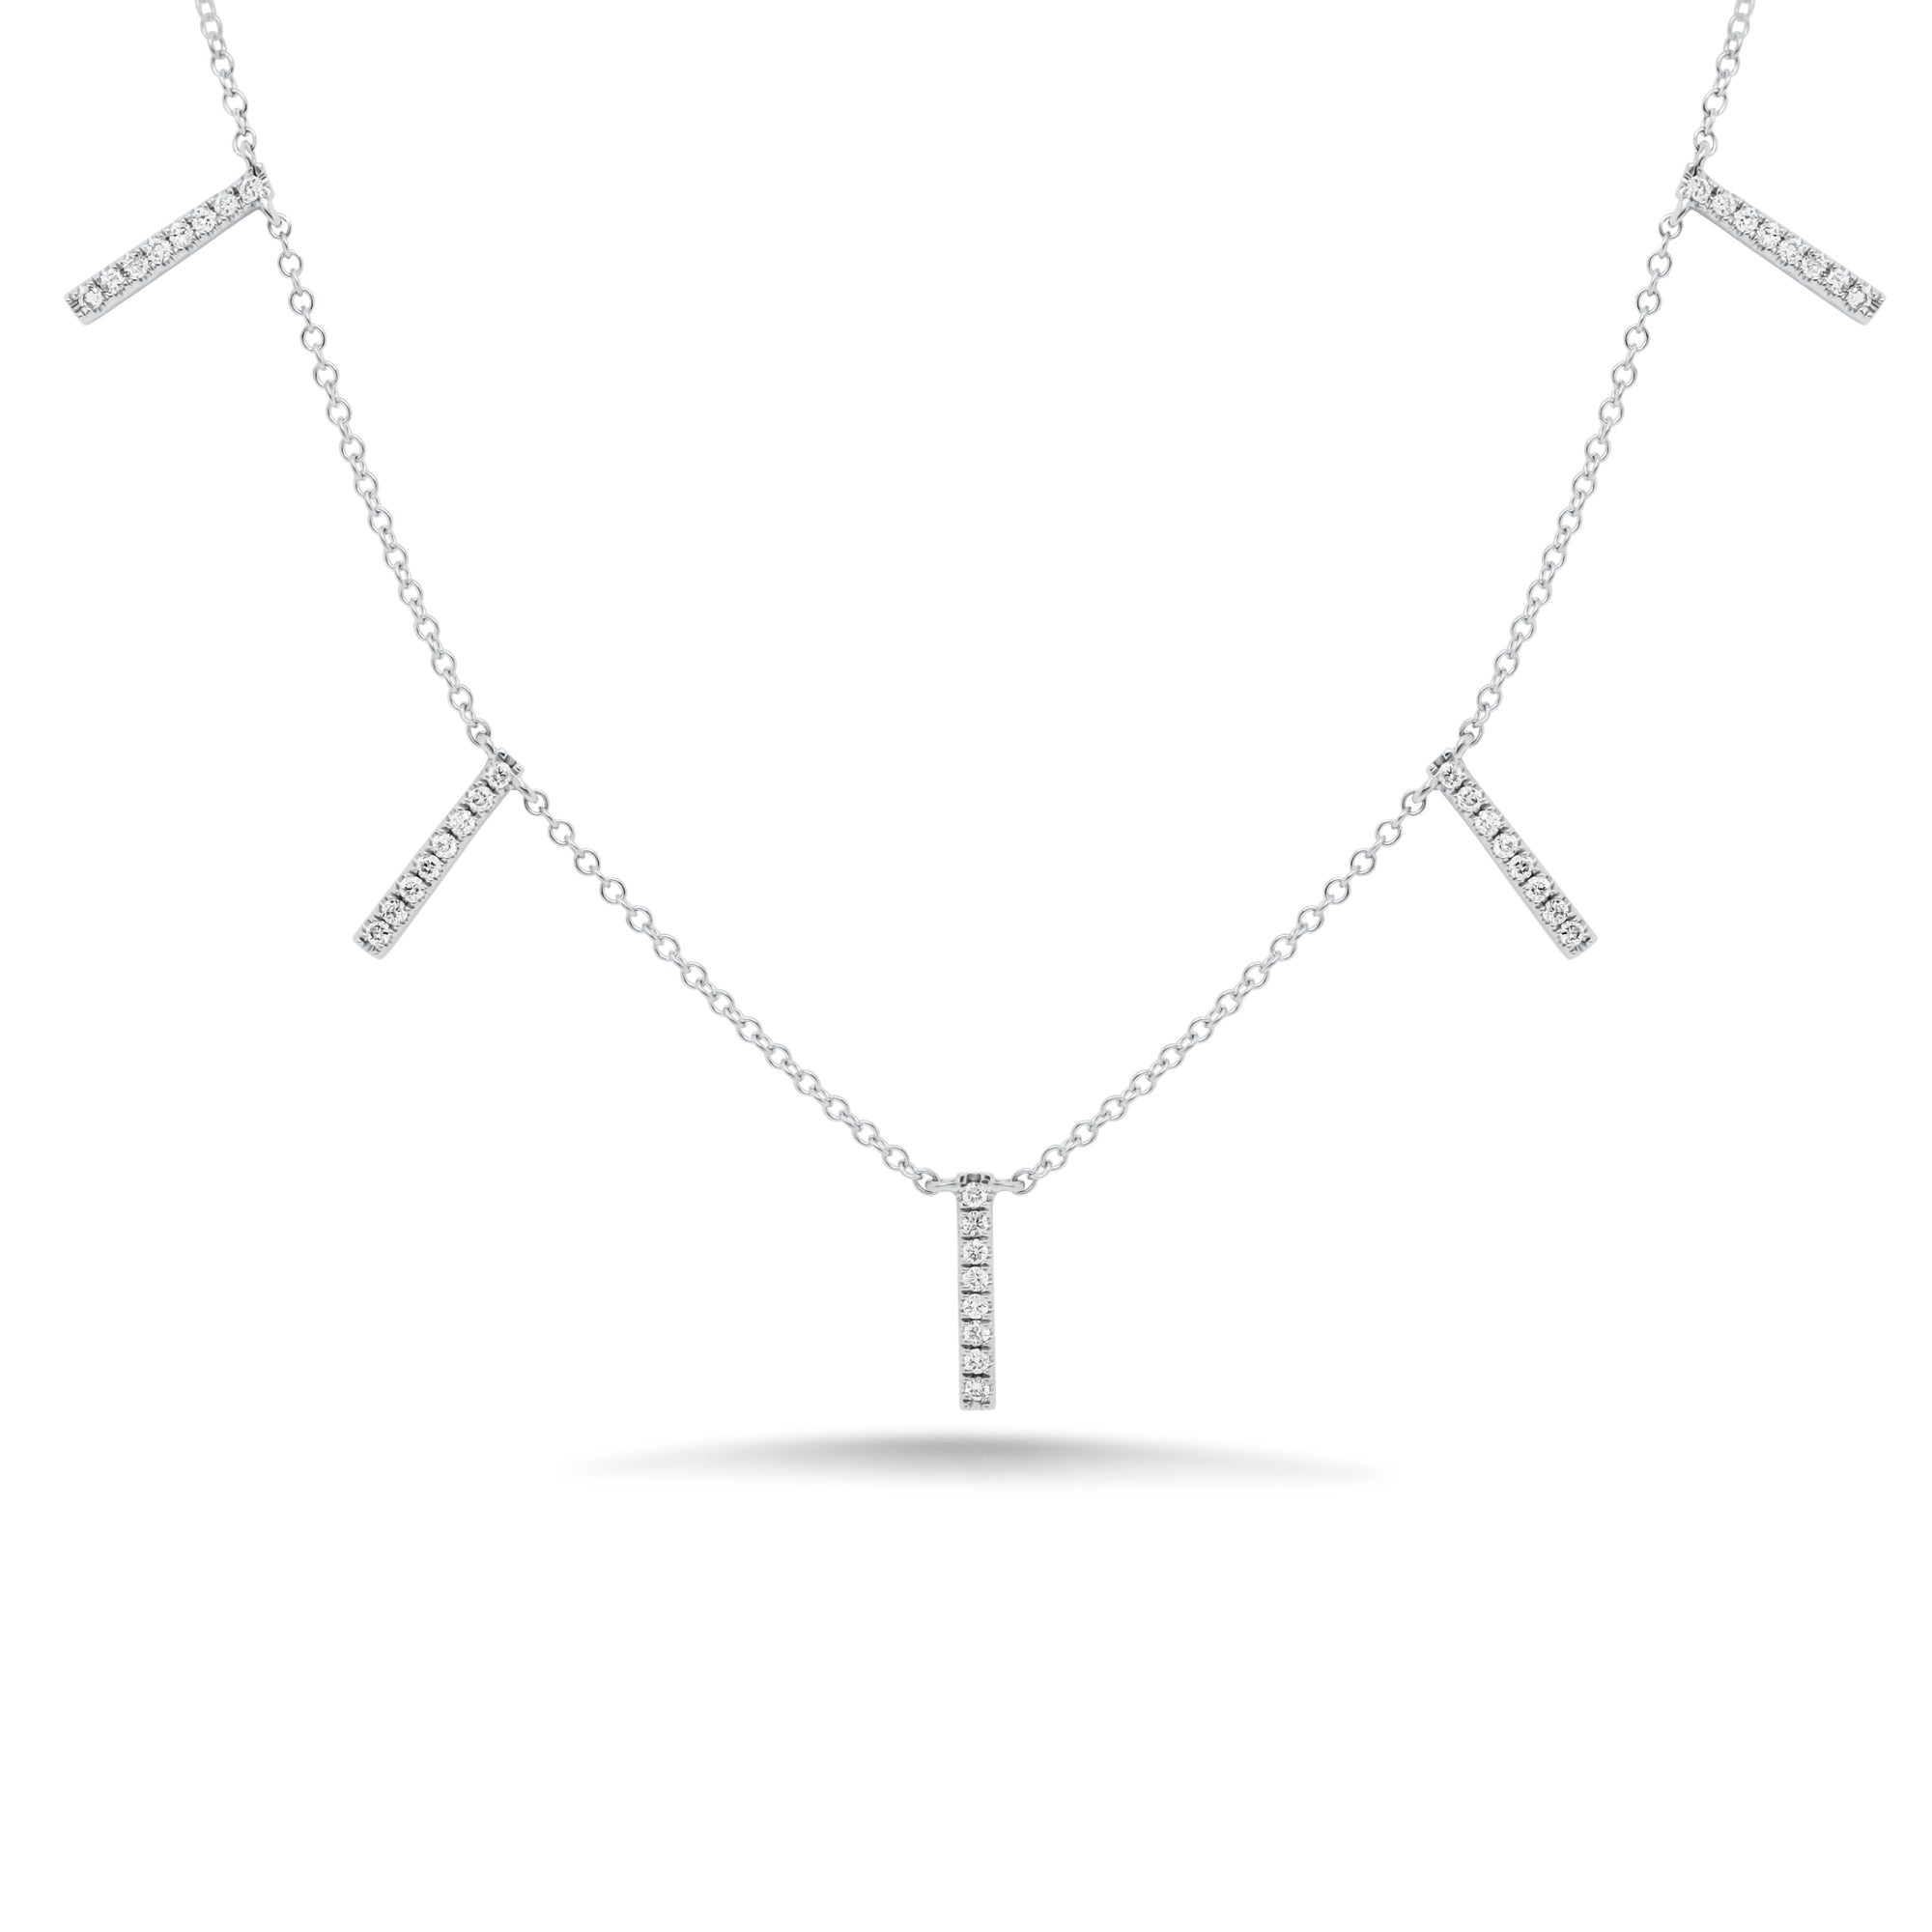 Pave Diamond Bar Dangle Necklace  - 14K gold weighing 2.20 grams  - 40 round diamonds totaling 0.22 carats